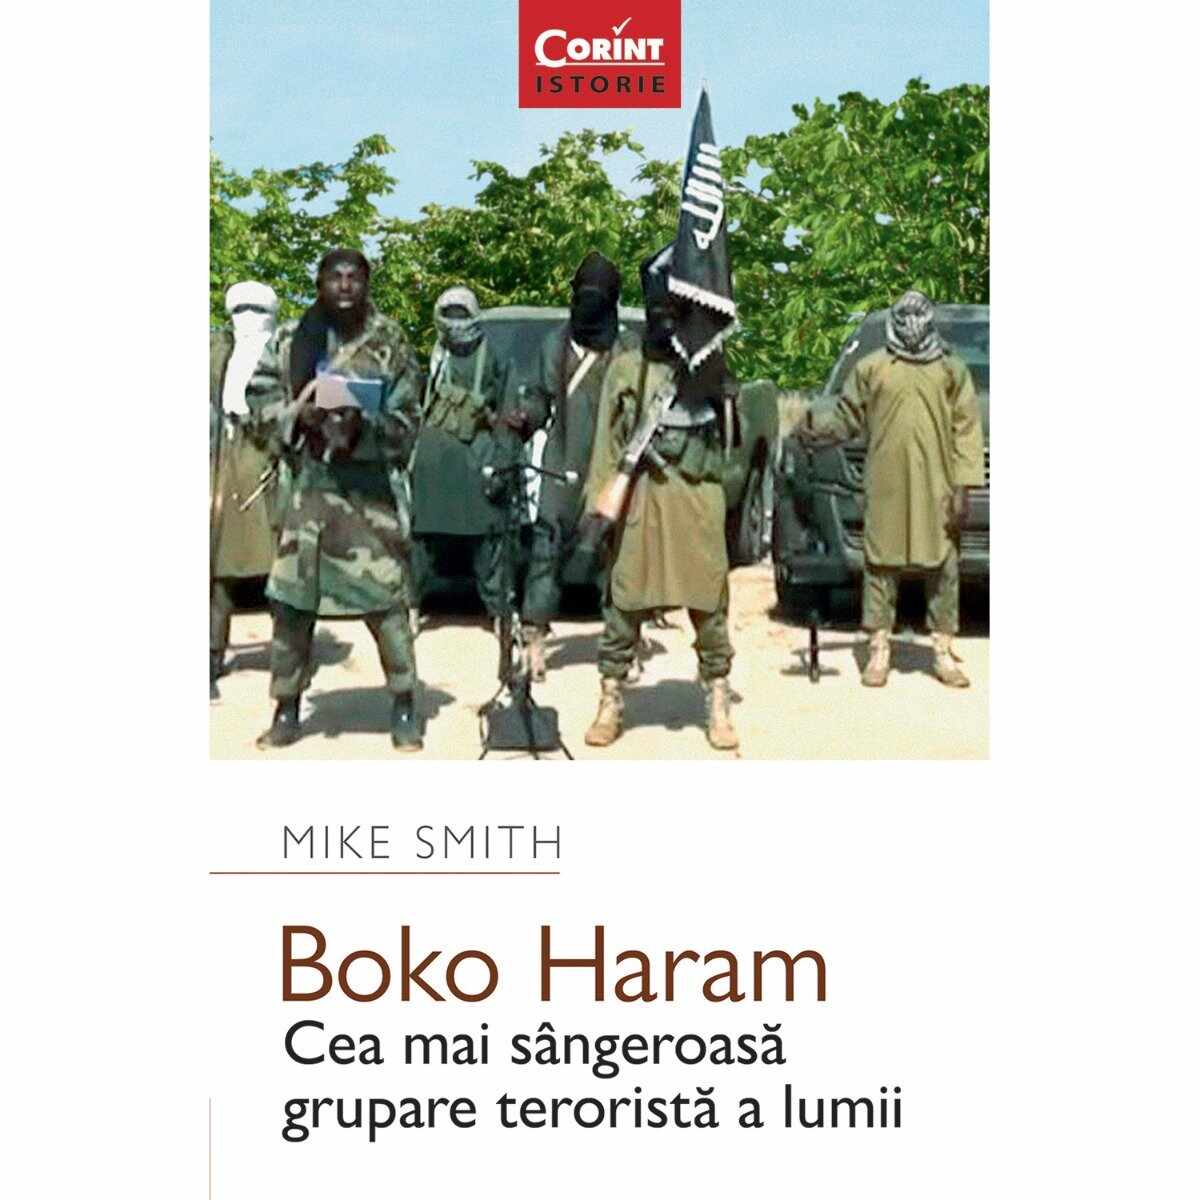 Carte Editura Corint, Boko Haram, Mike Smith